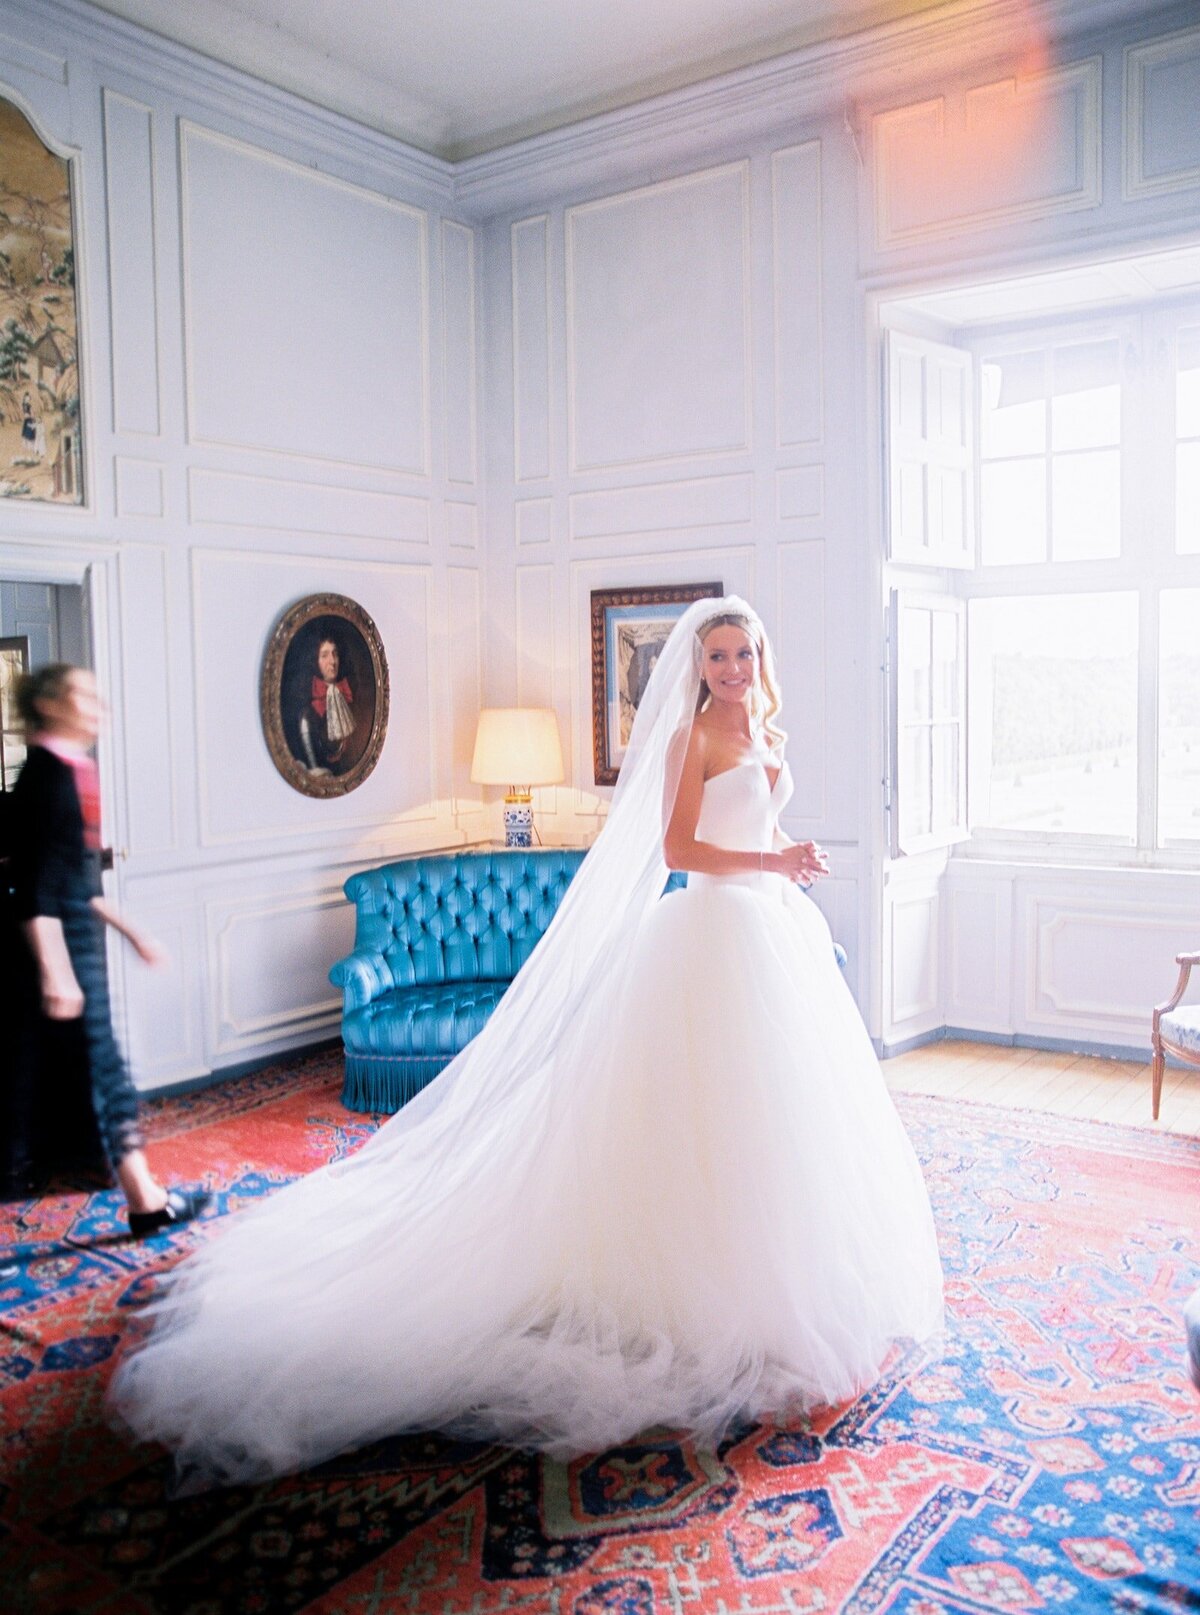 vaux-le-vicomte-luxury-wedding-phototographer-in-paris (55 of 56)